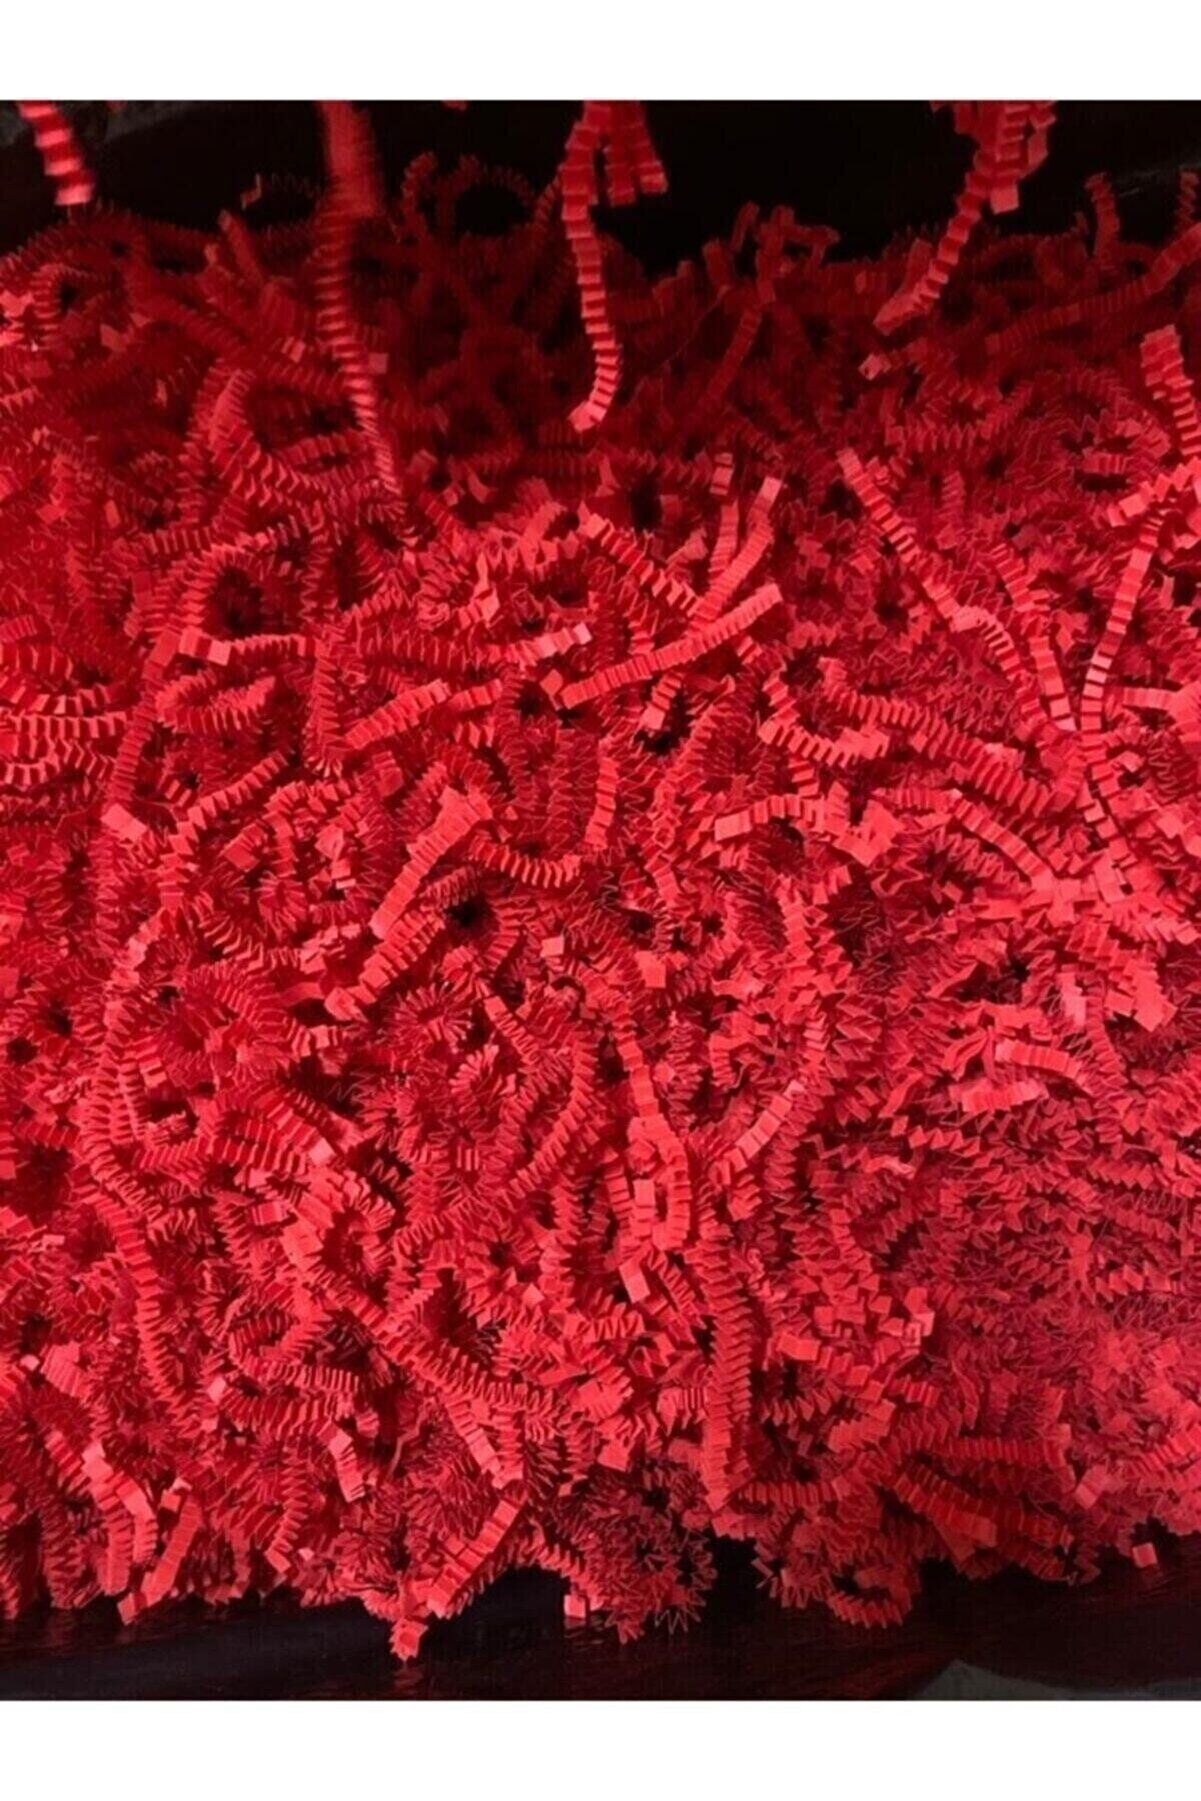 Kırpık Z Zigzag Pelur Kırpıntı Kağıt 1000 Gram Renk Süs Dolgu Malzemesi Red Paper